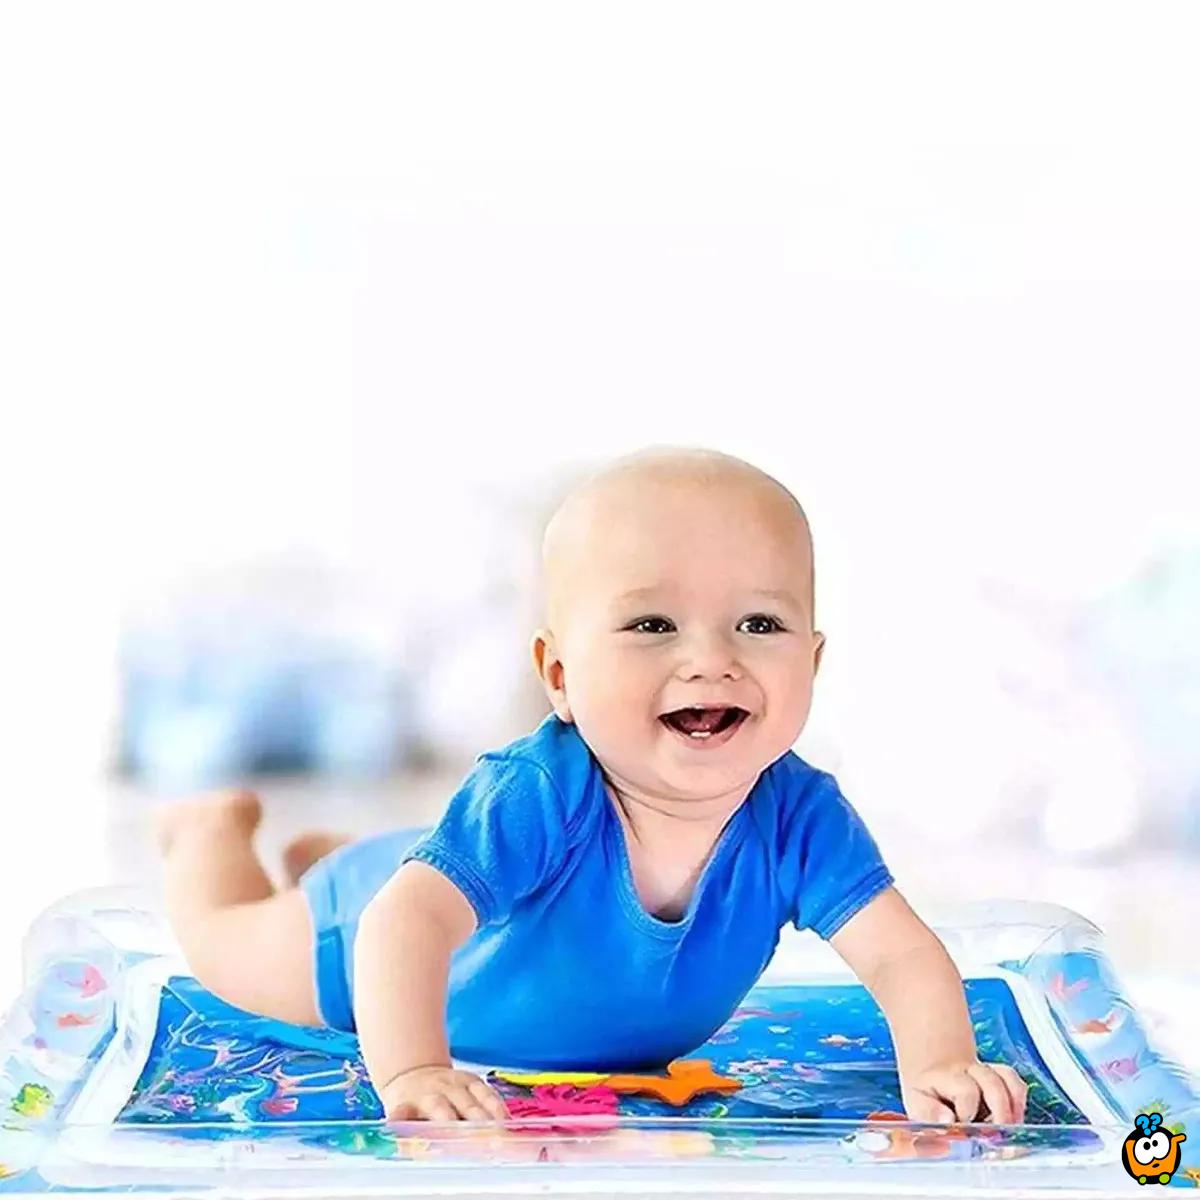 Seaworld Playmat - Vodena prostirka za aktivnu zabavu beba